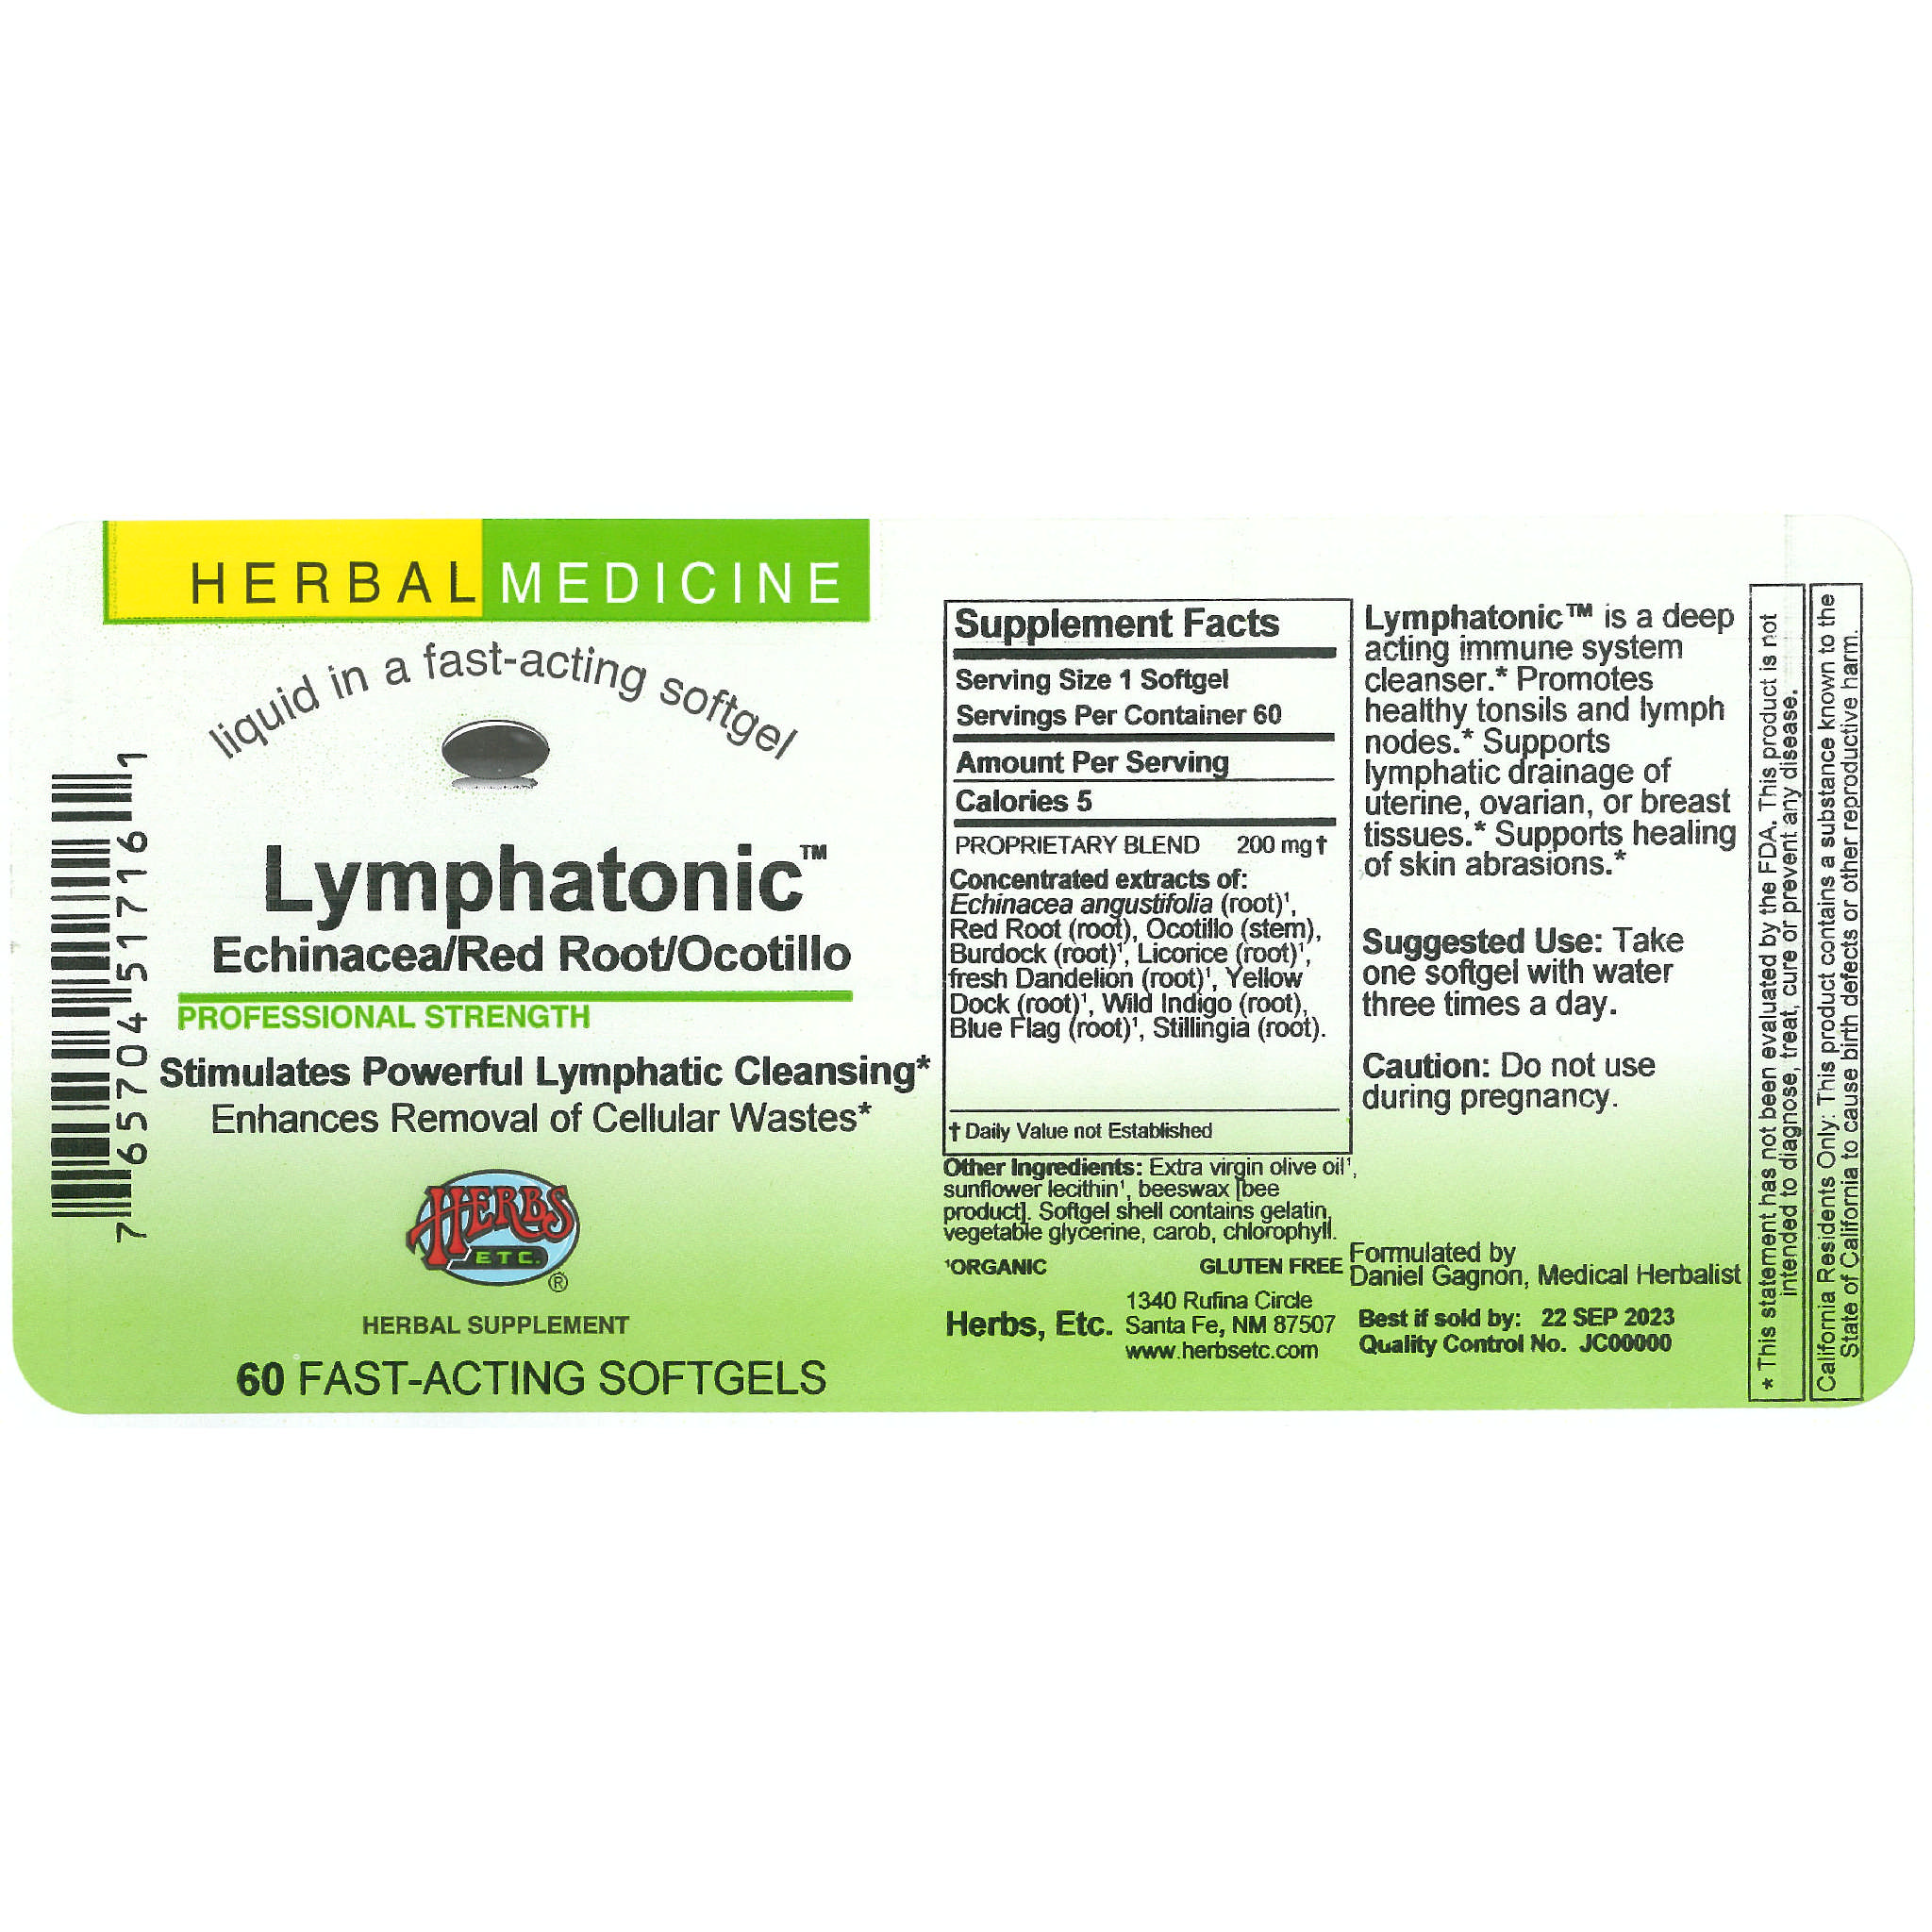 Herbs Etc - Lymphatonic